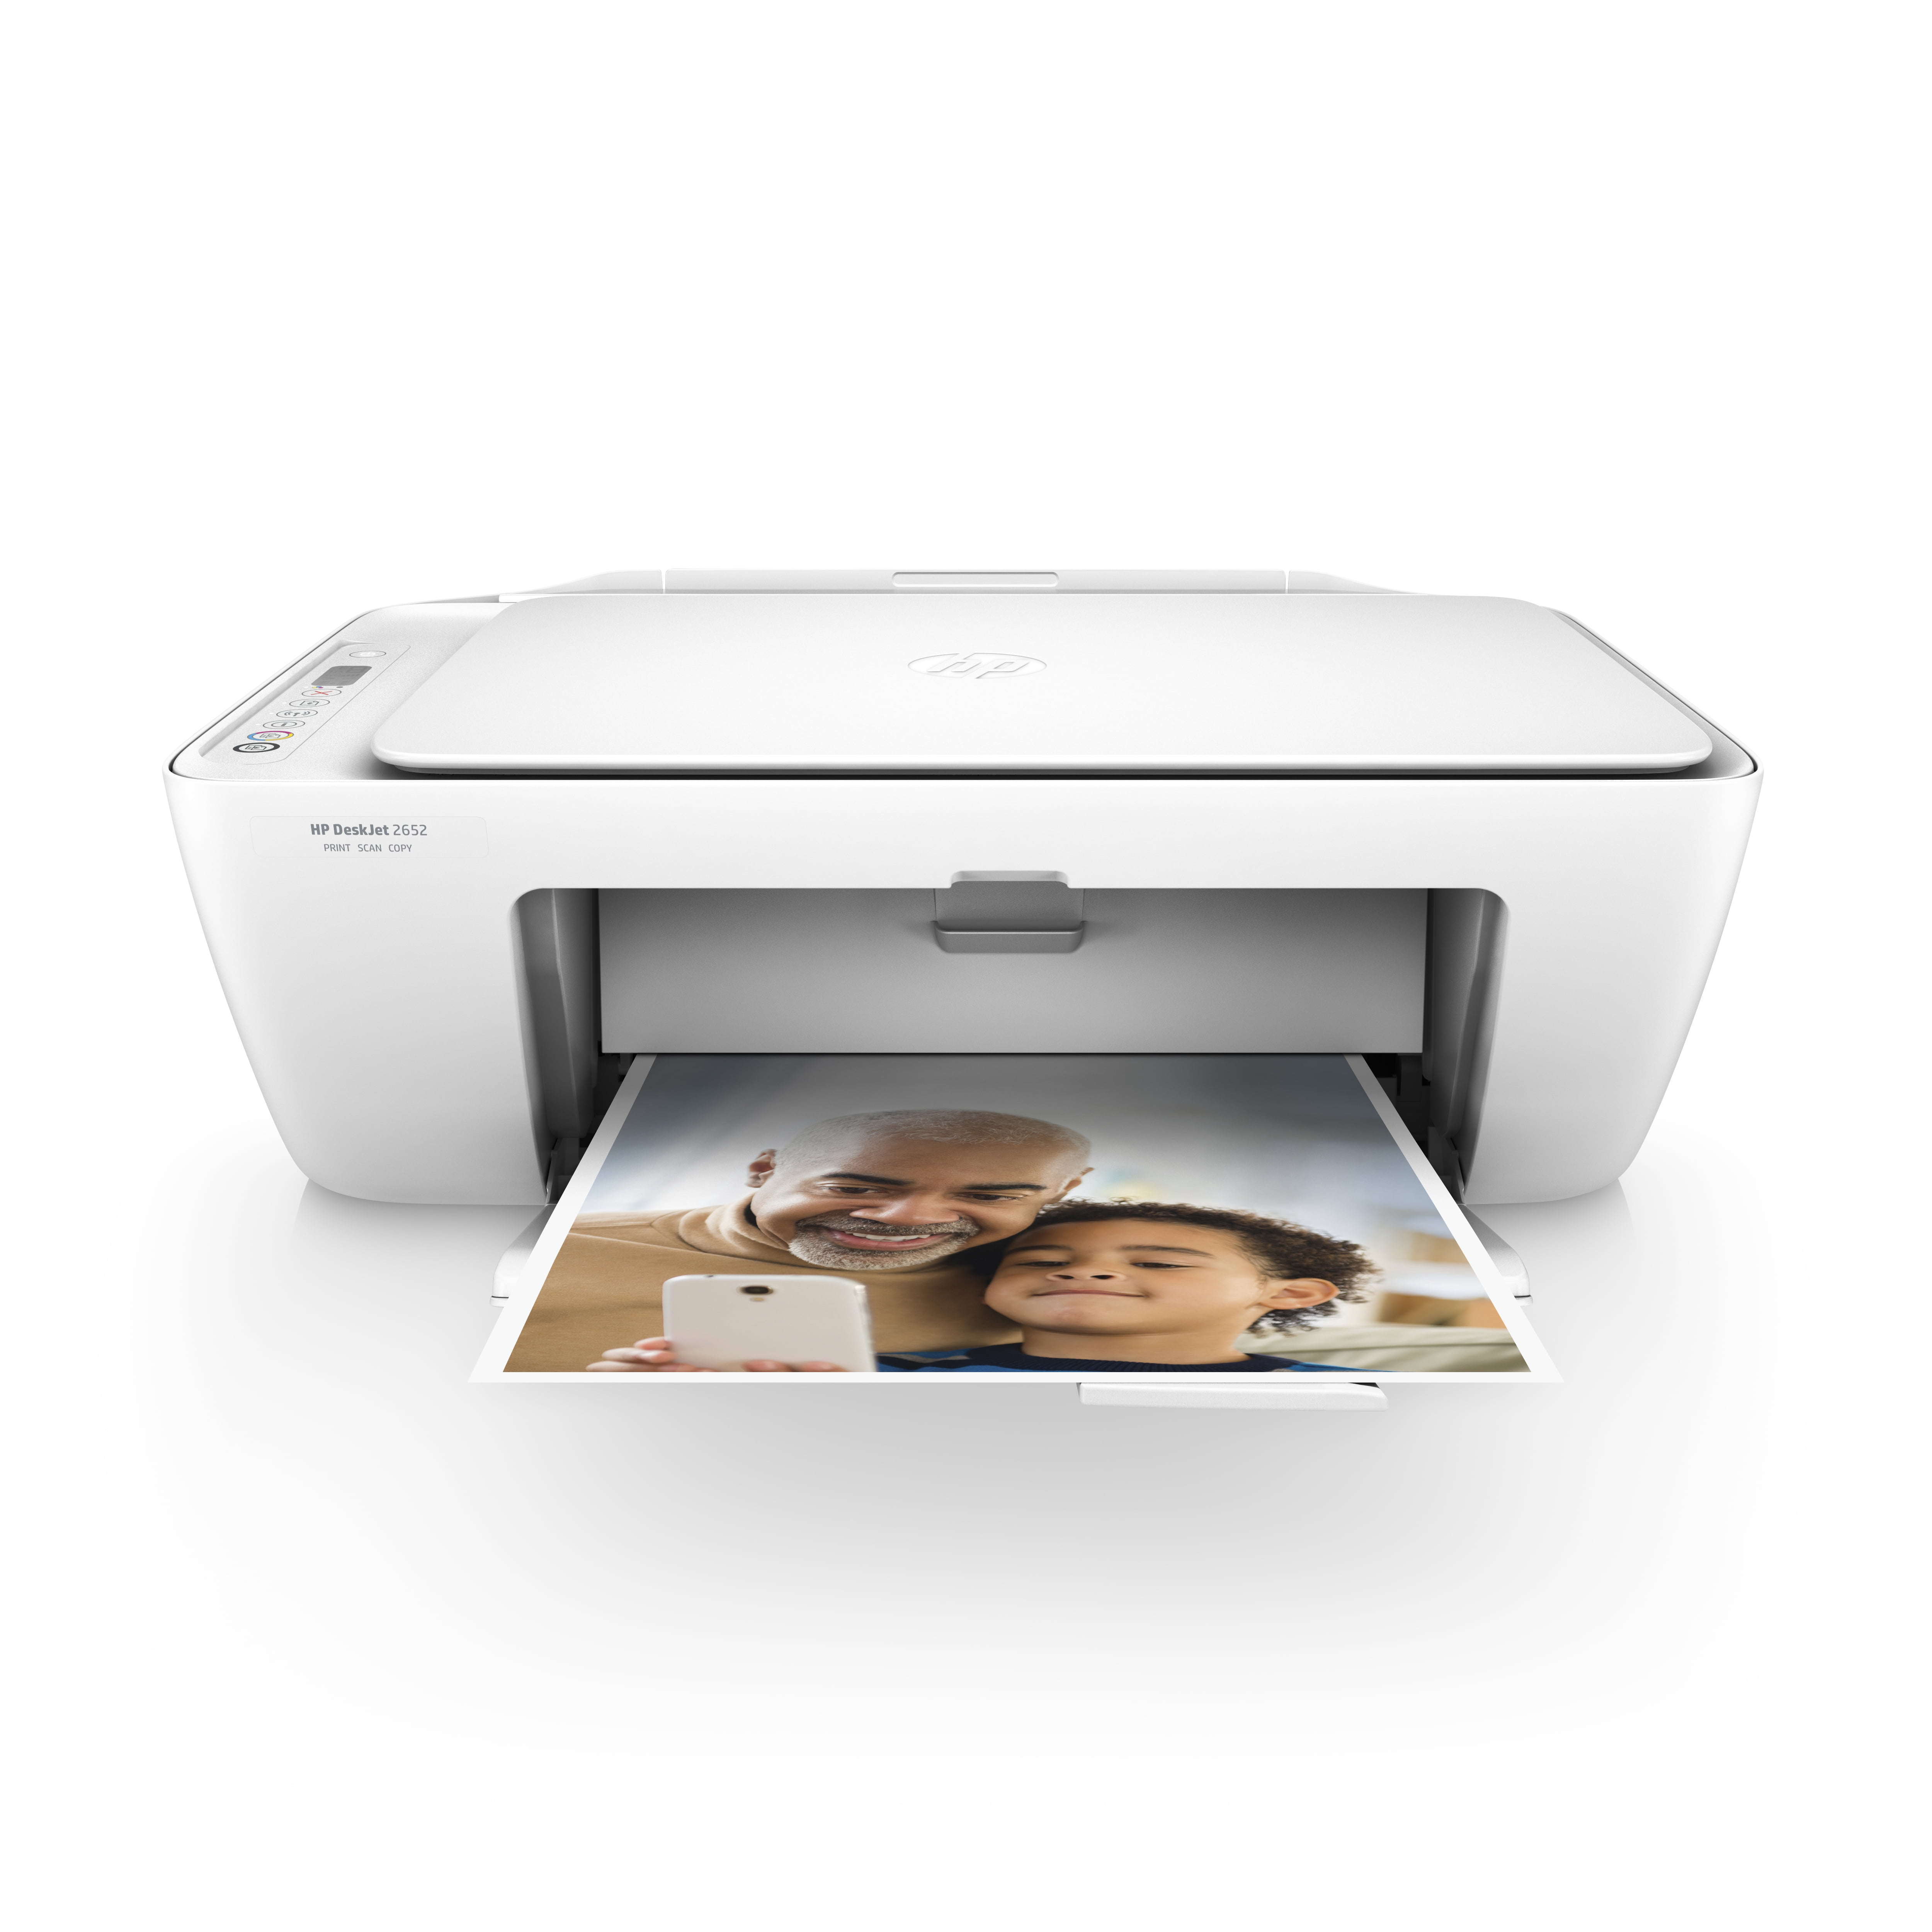 HP DeskJet 2652 All-in-One Wireless Inkjet Printer - Instant Ink White - Walmart.com